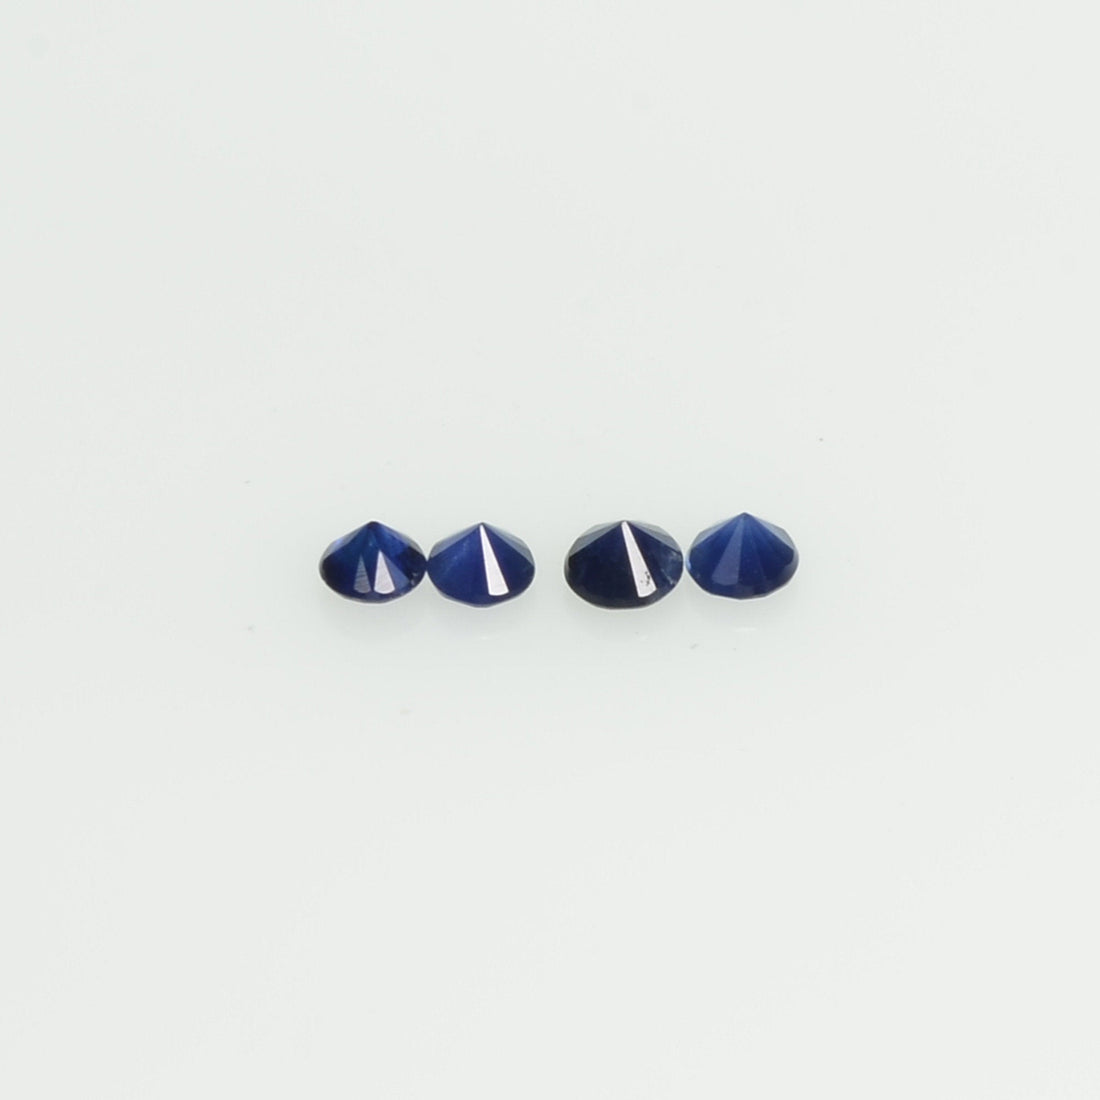 1.1-3.6 mm Natural Blue Sapphire Loose Gemstone Round Diamond Cut Vs Quality Color - Thai Gems Export Ltd.